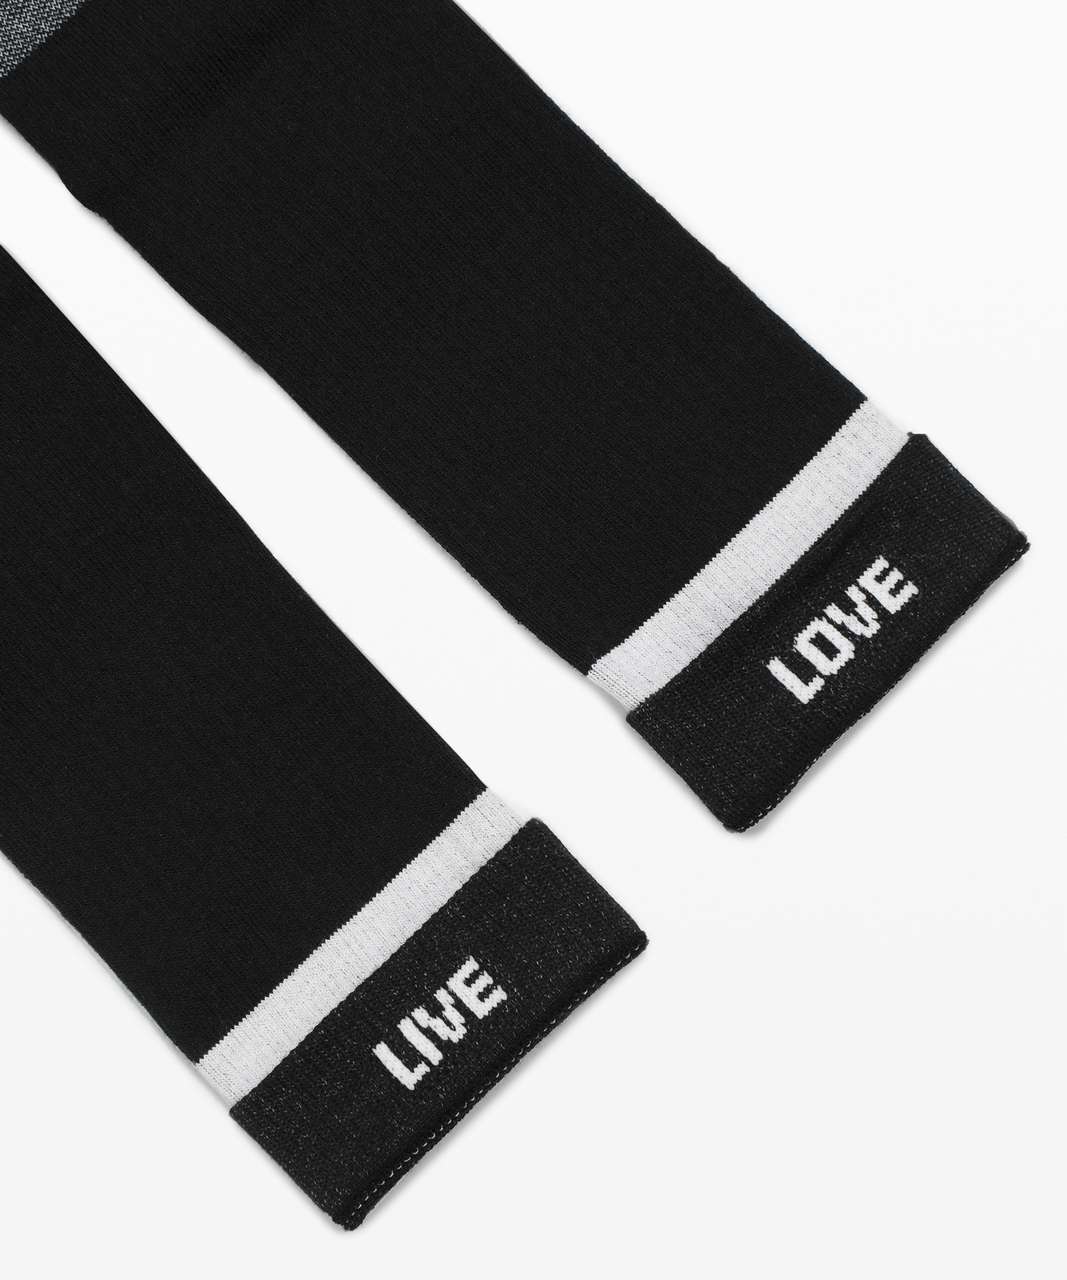 Lululemon Daily Stride Crew Sock Sport Stripe *3 Pack Boxed Set - Black / Vapor / Smoked Spruce